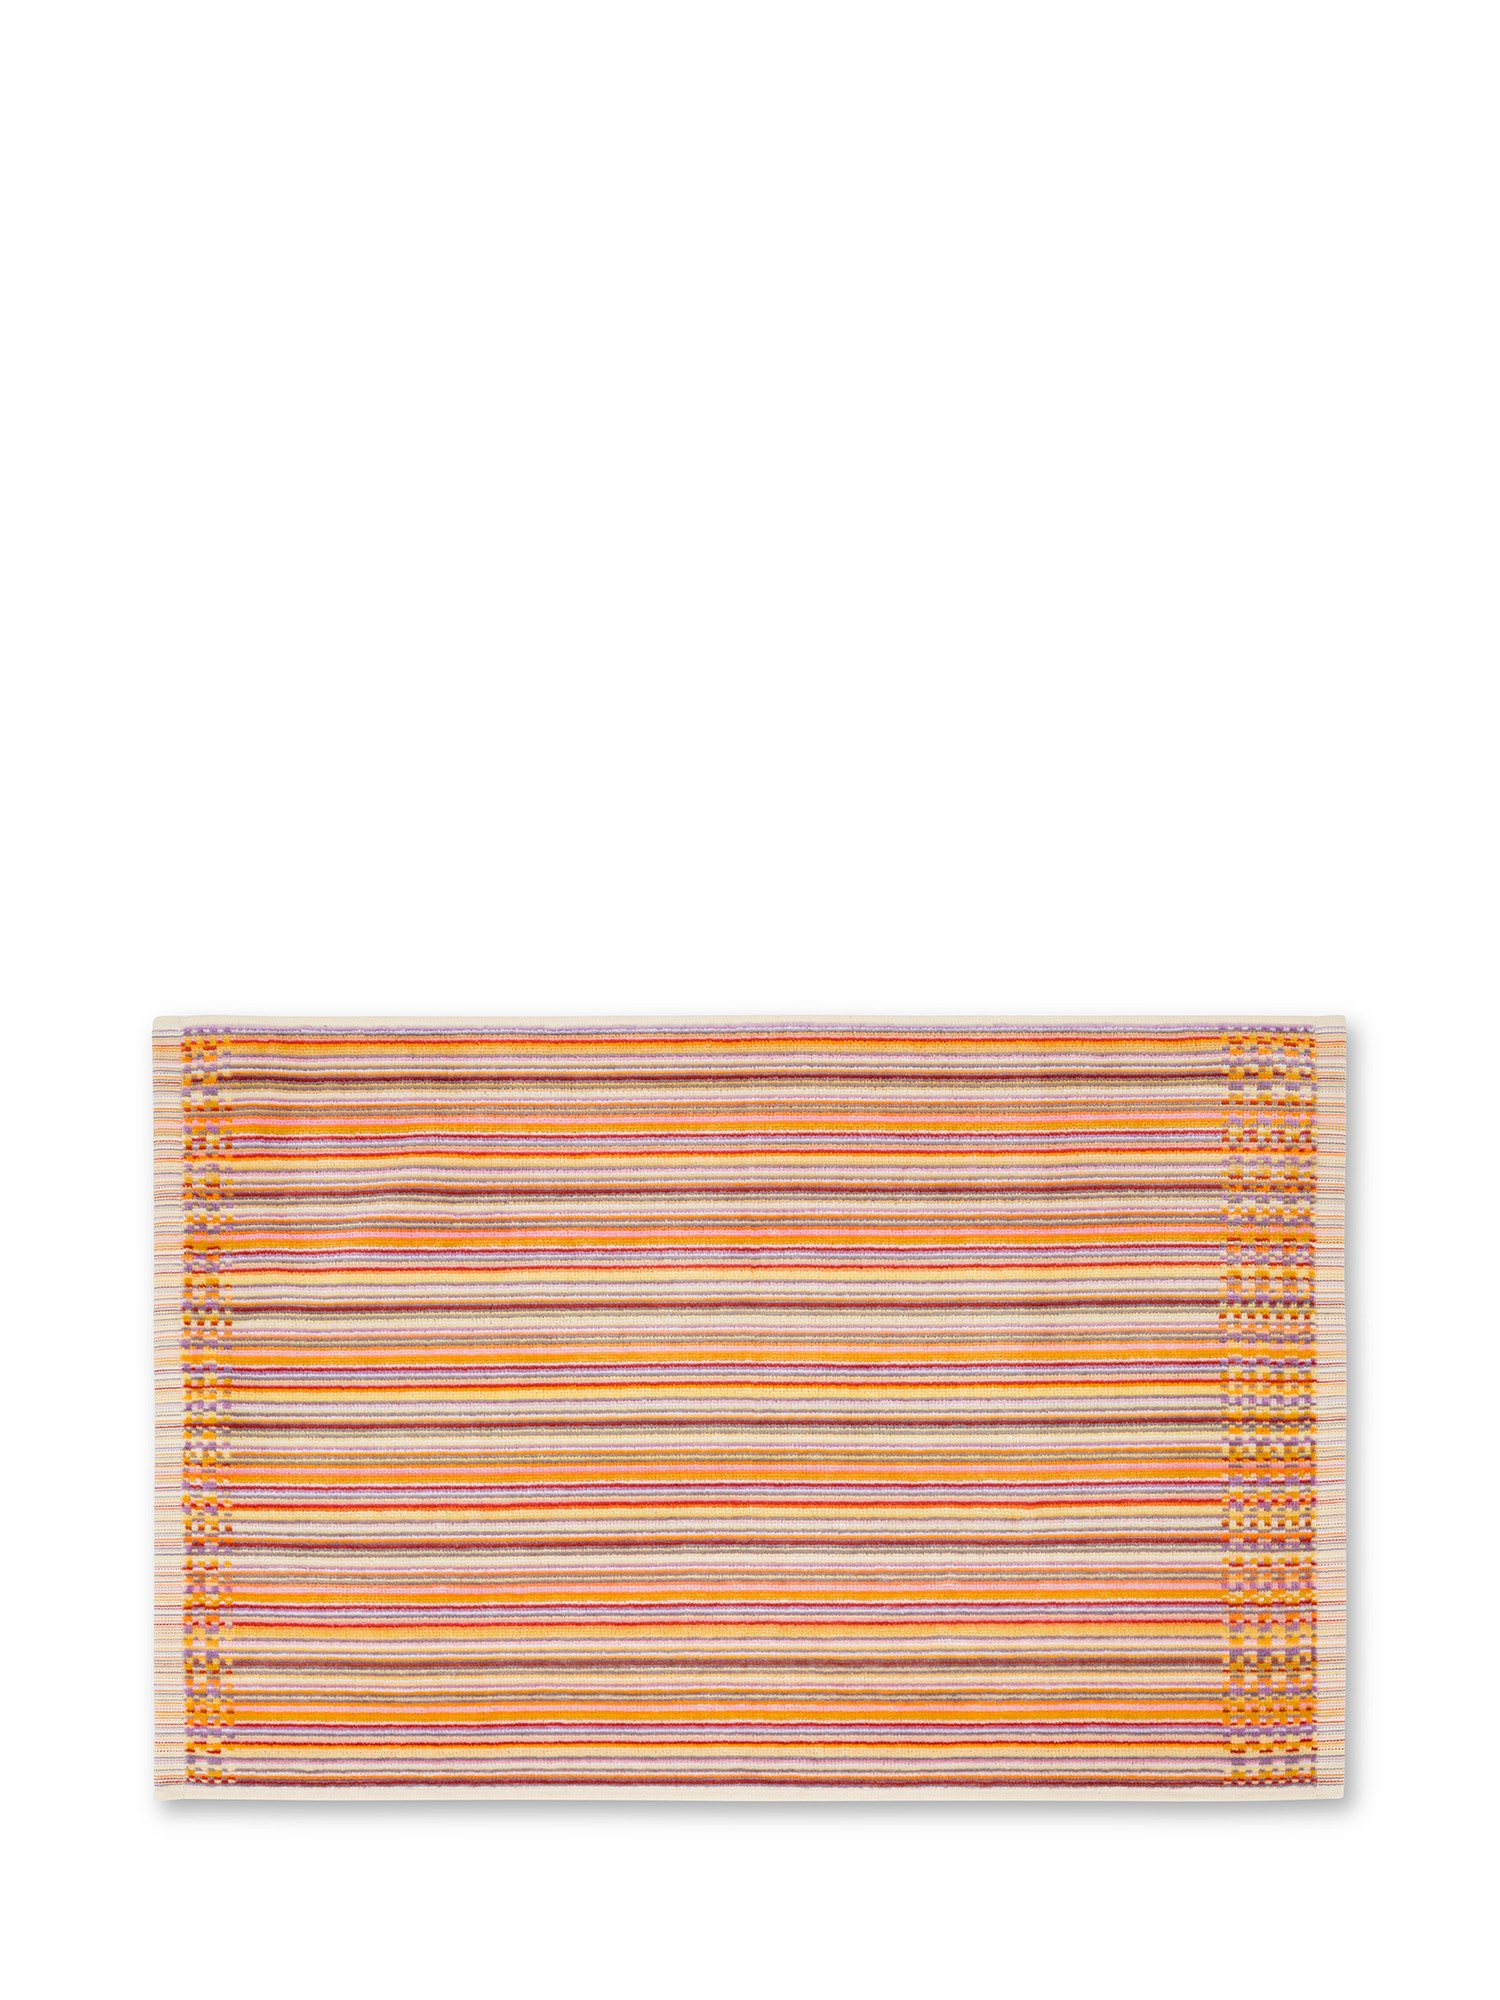 Asciugamano cotone velour motivo millerighe, Multicolor, large image number 1